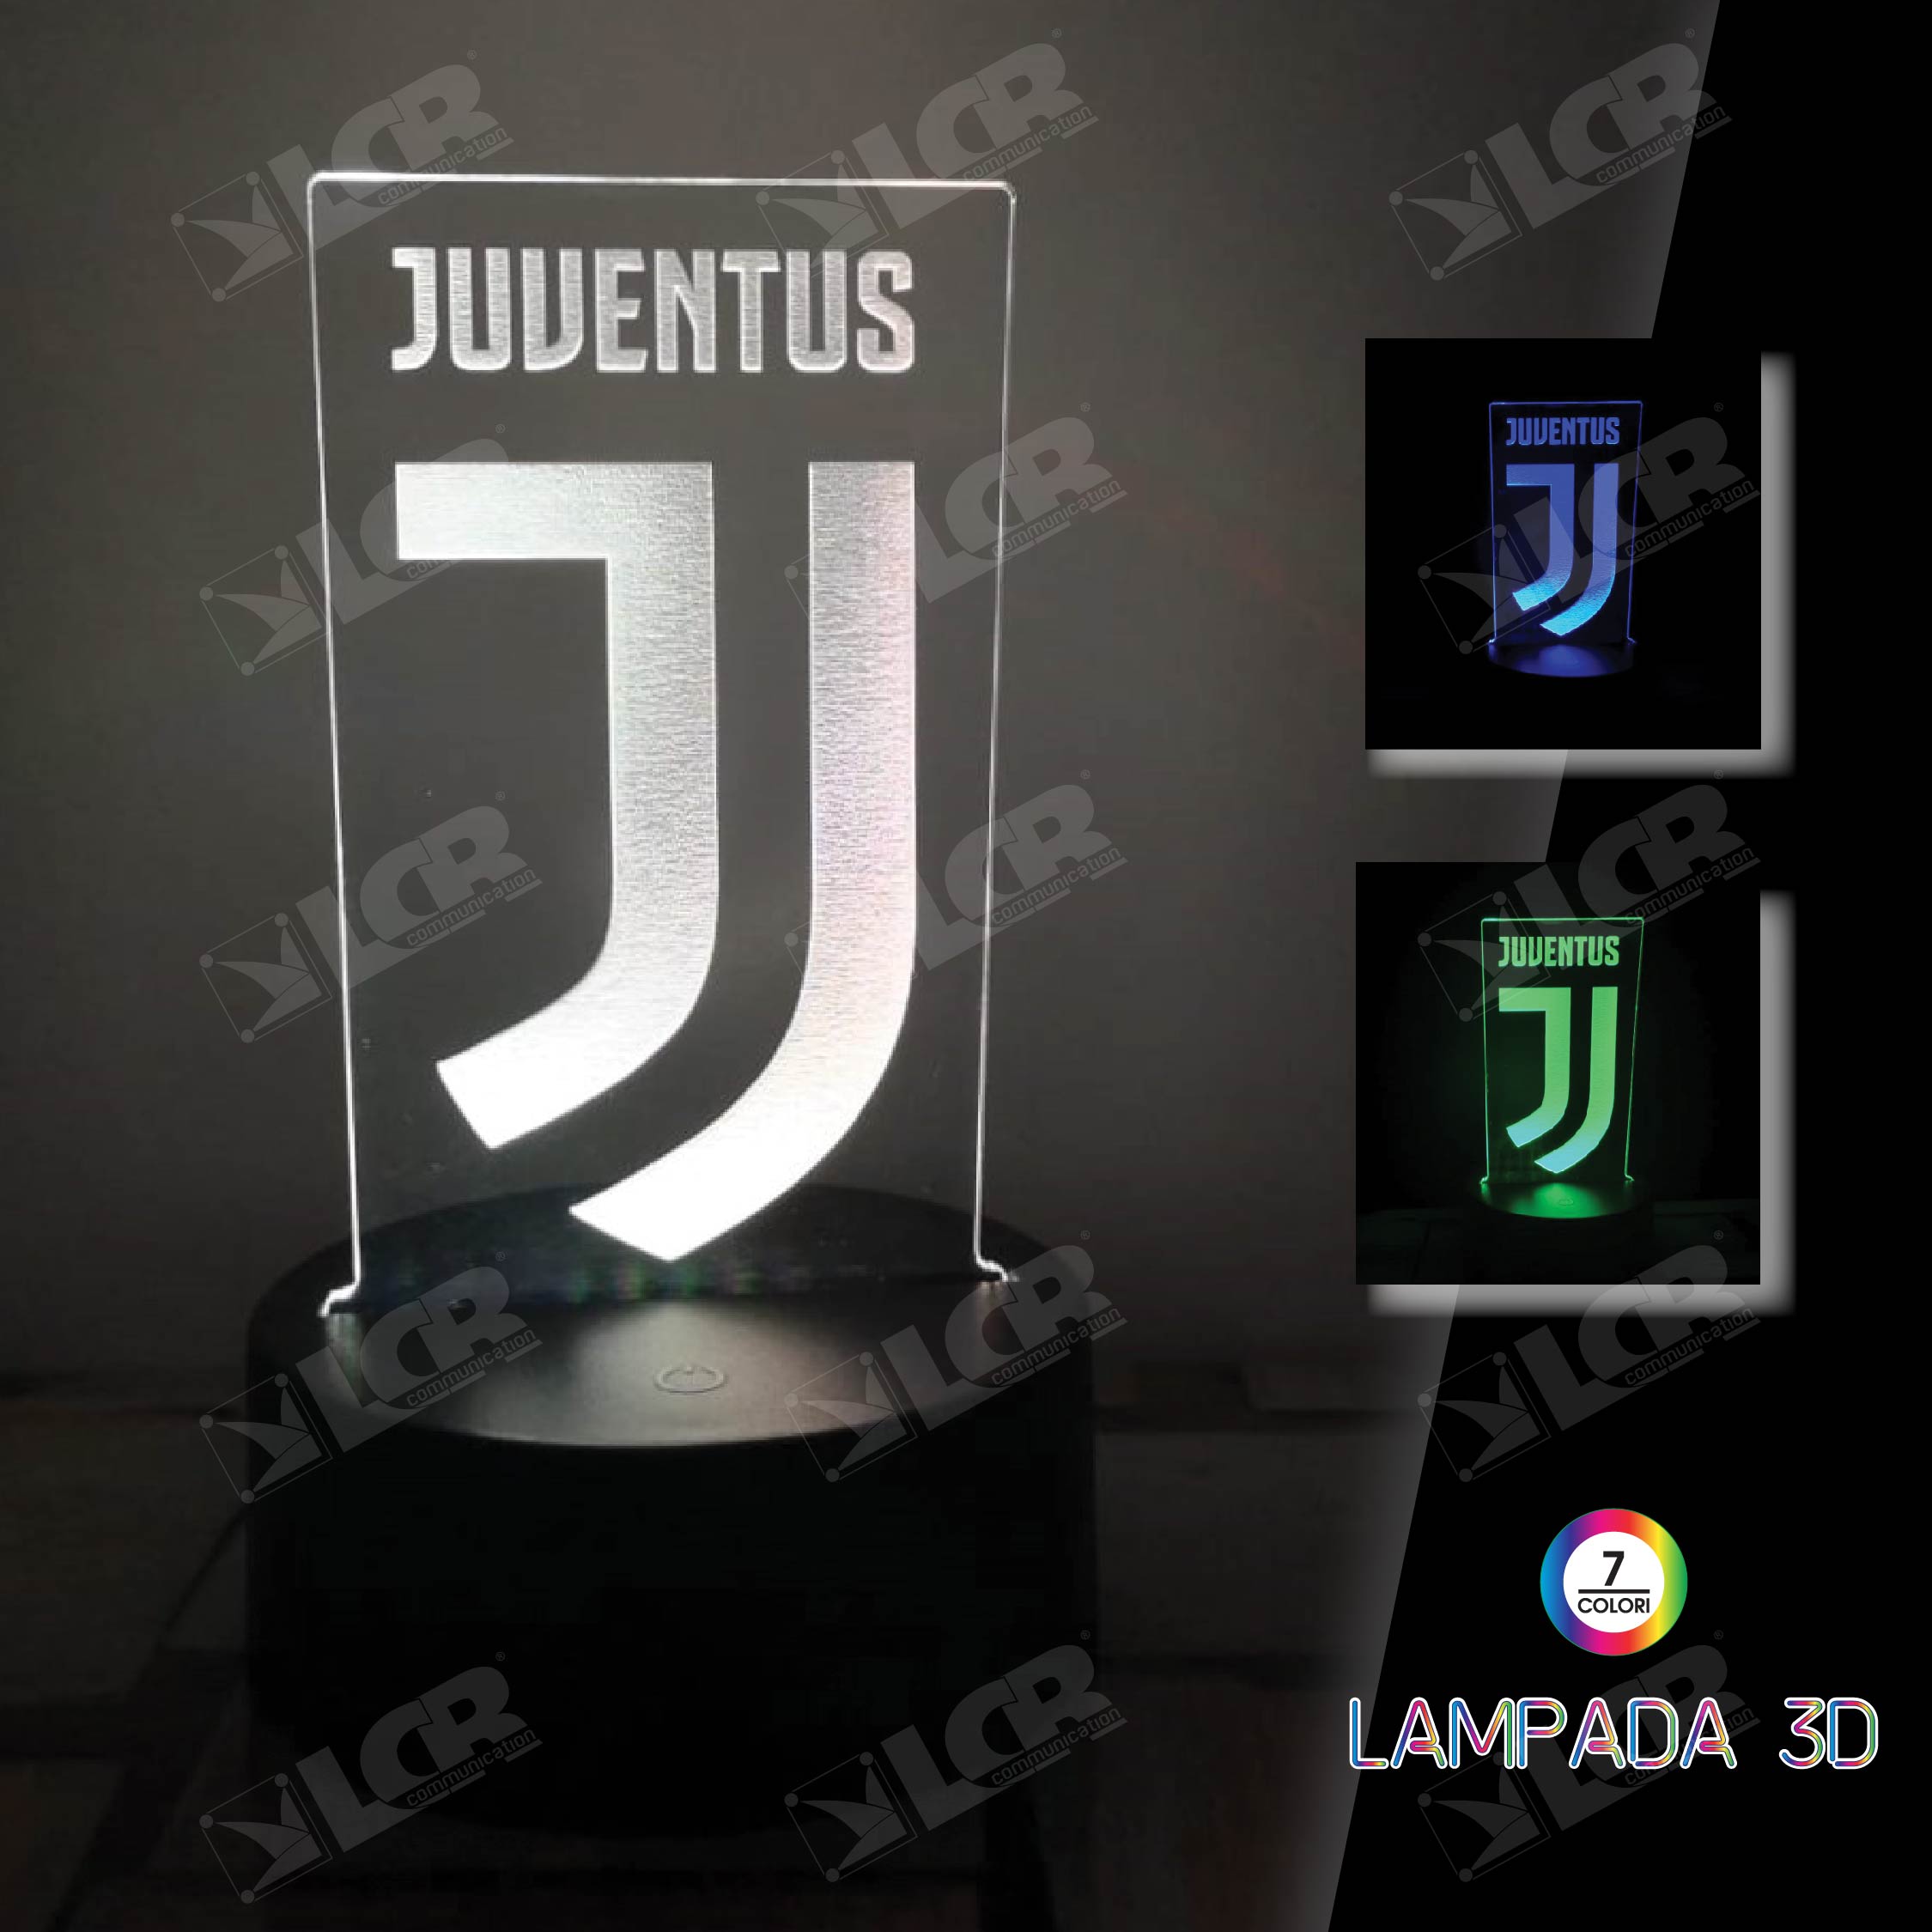 Lampada 3D Juventus - prezzo - offerta 